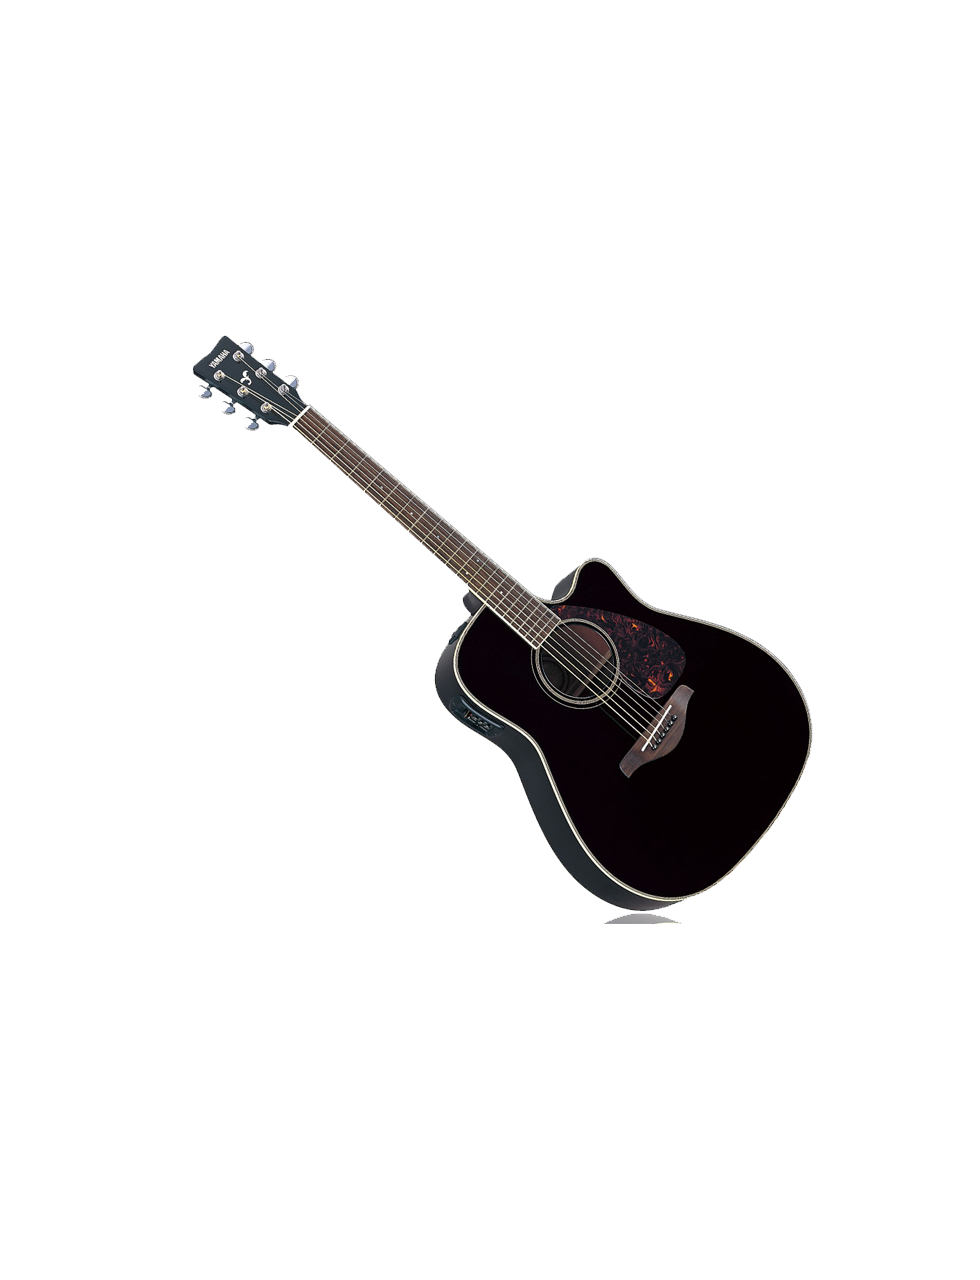 Yamaha-Guitar-Acoustic-FX370BL-2.png